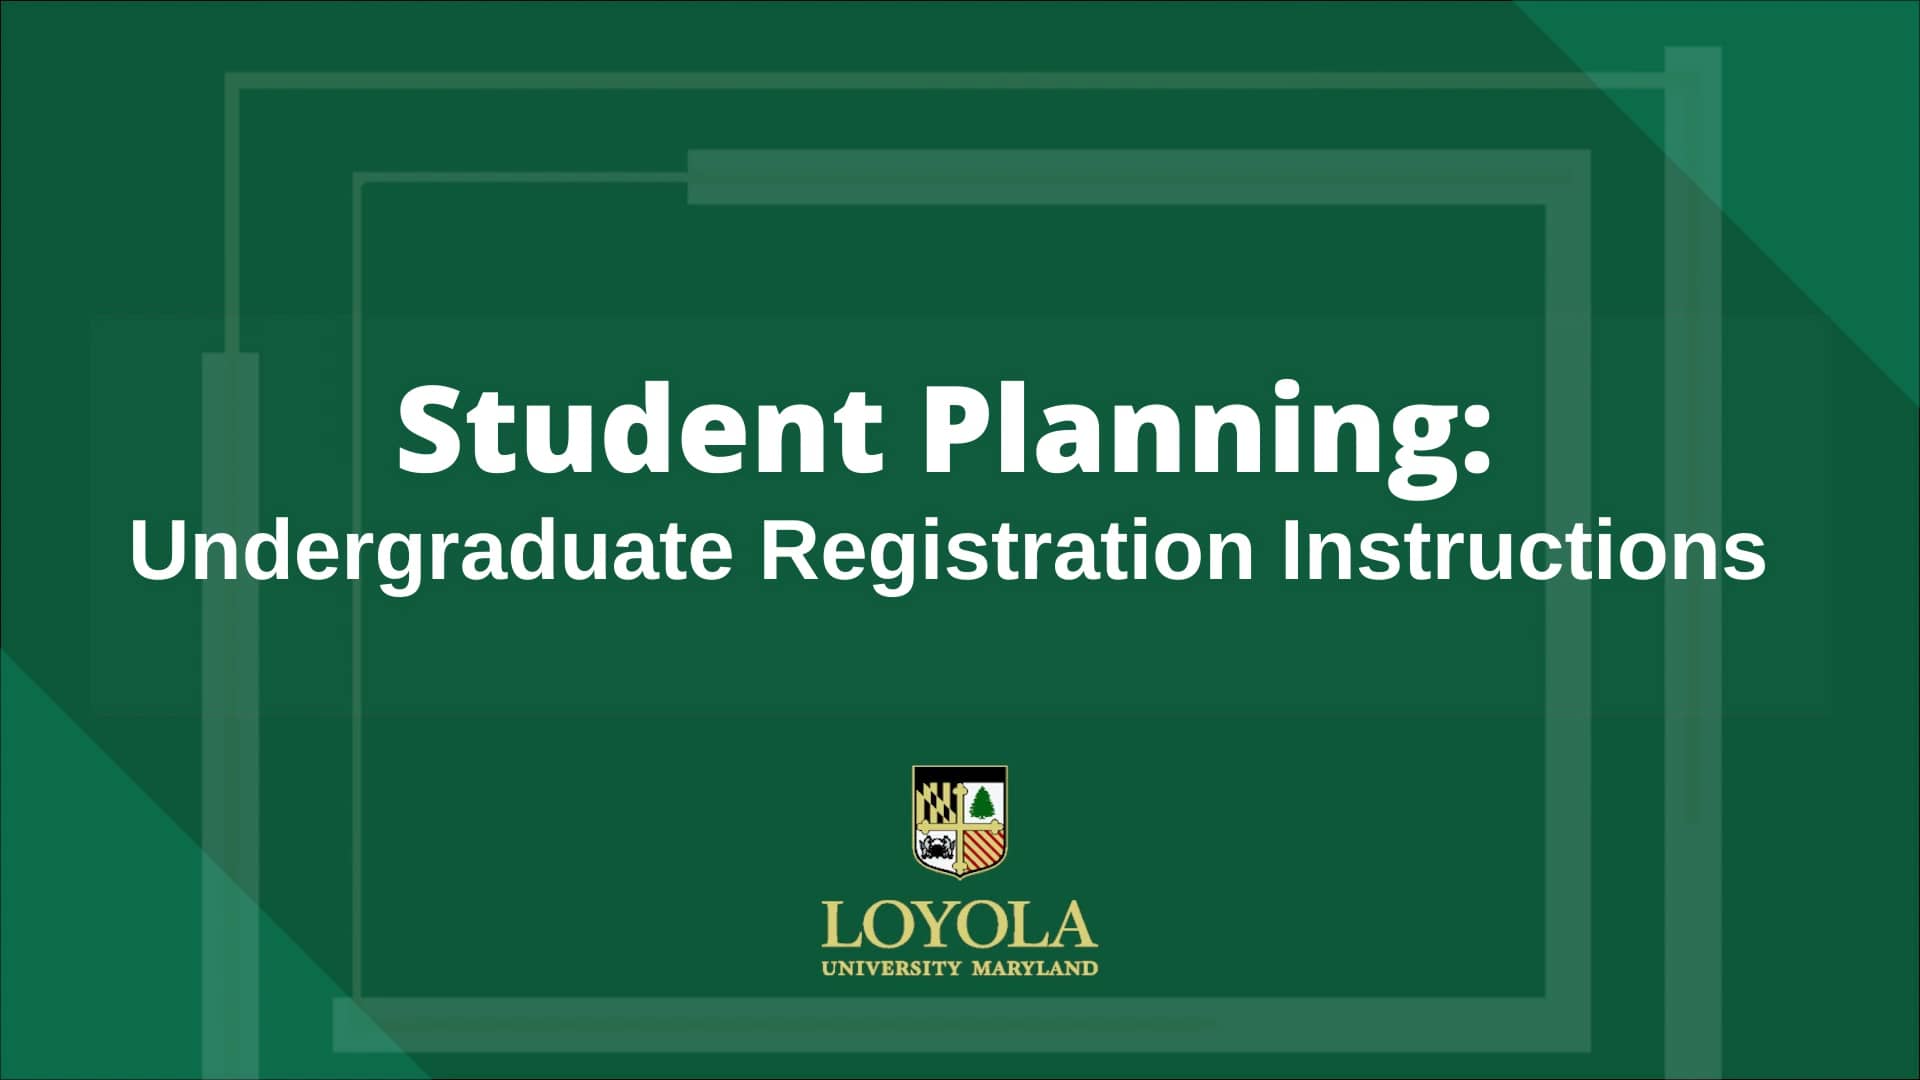 Student Planning Videos